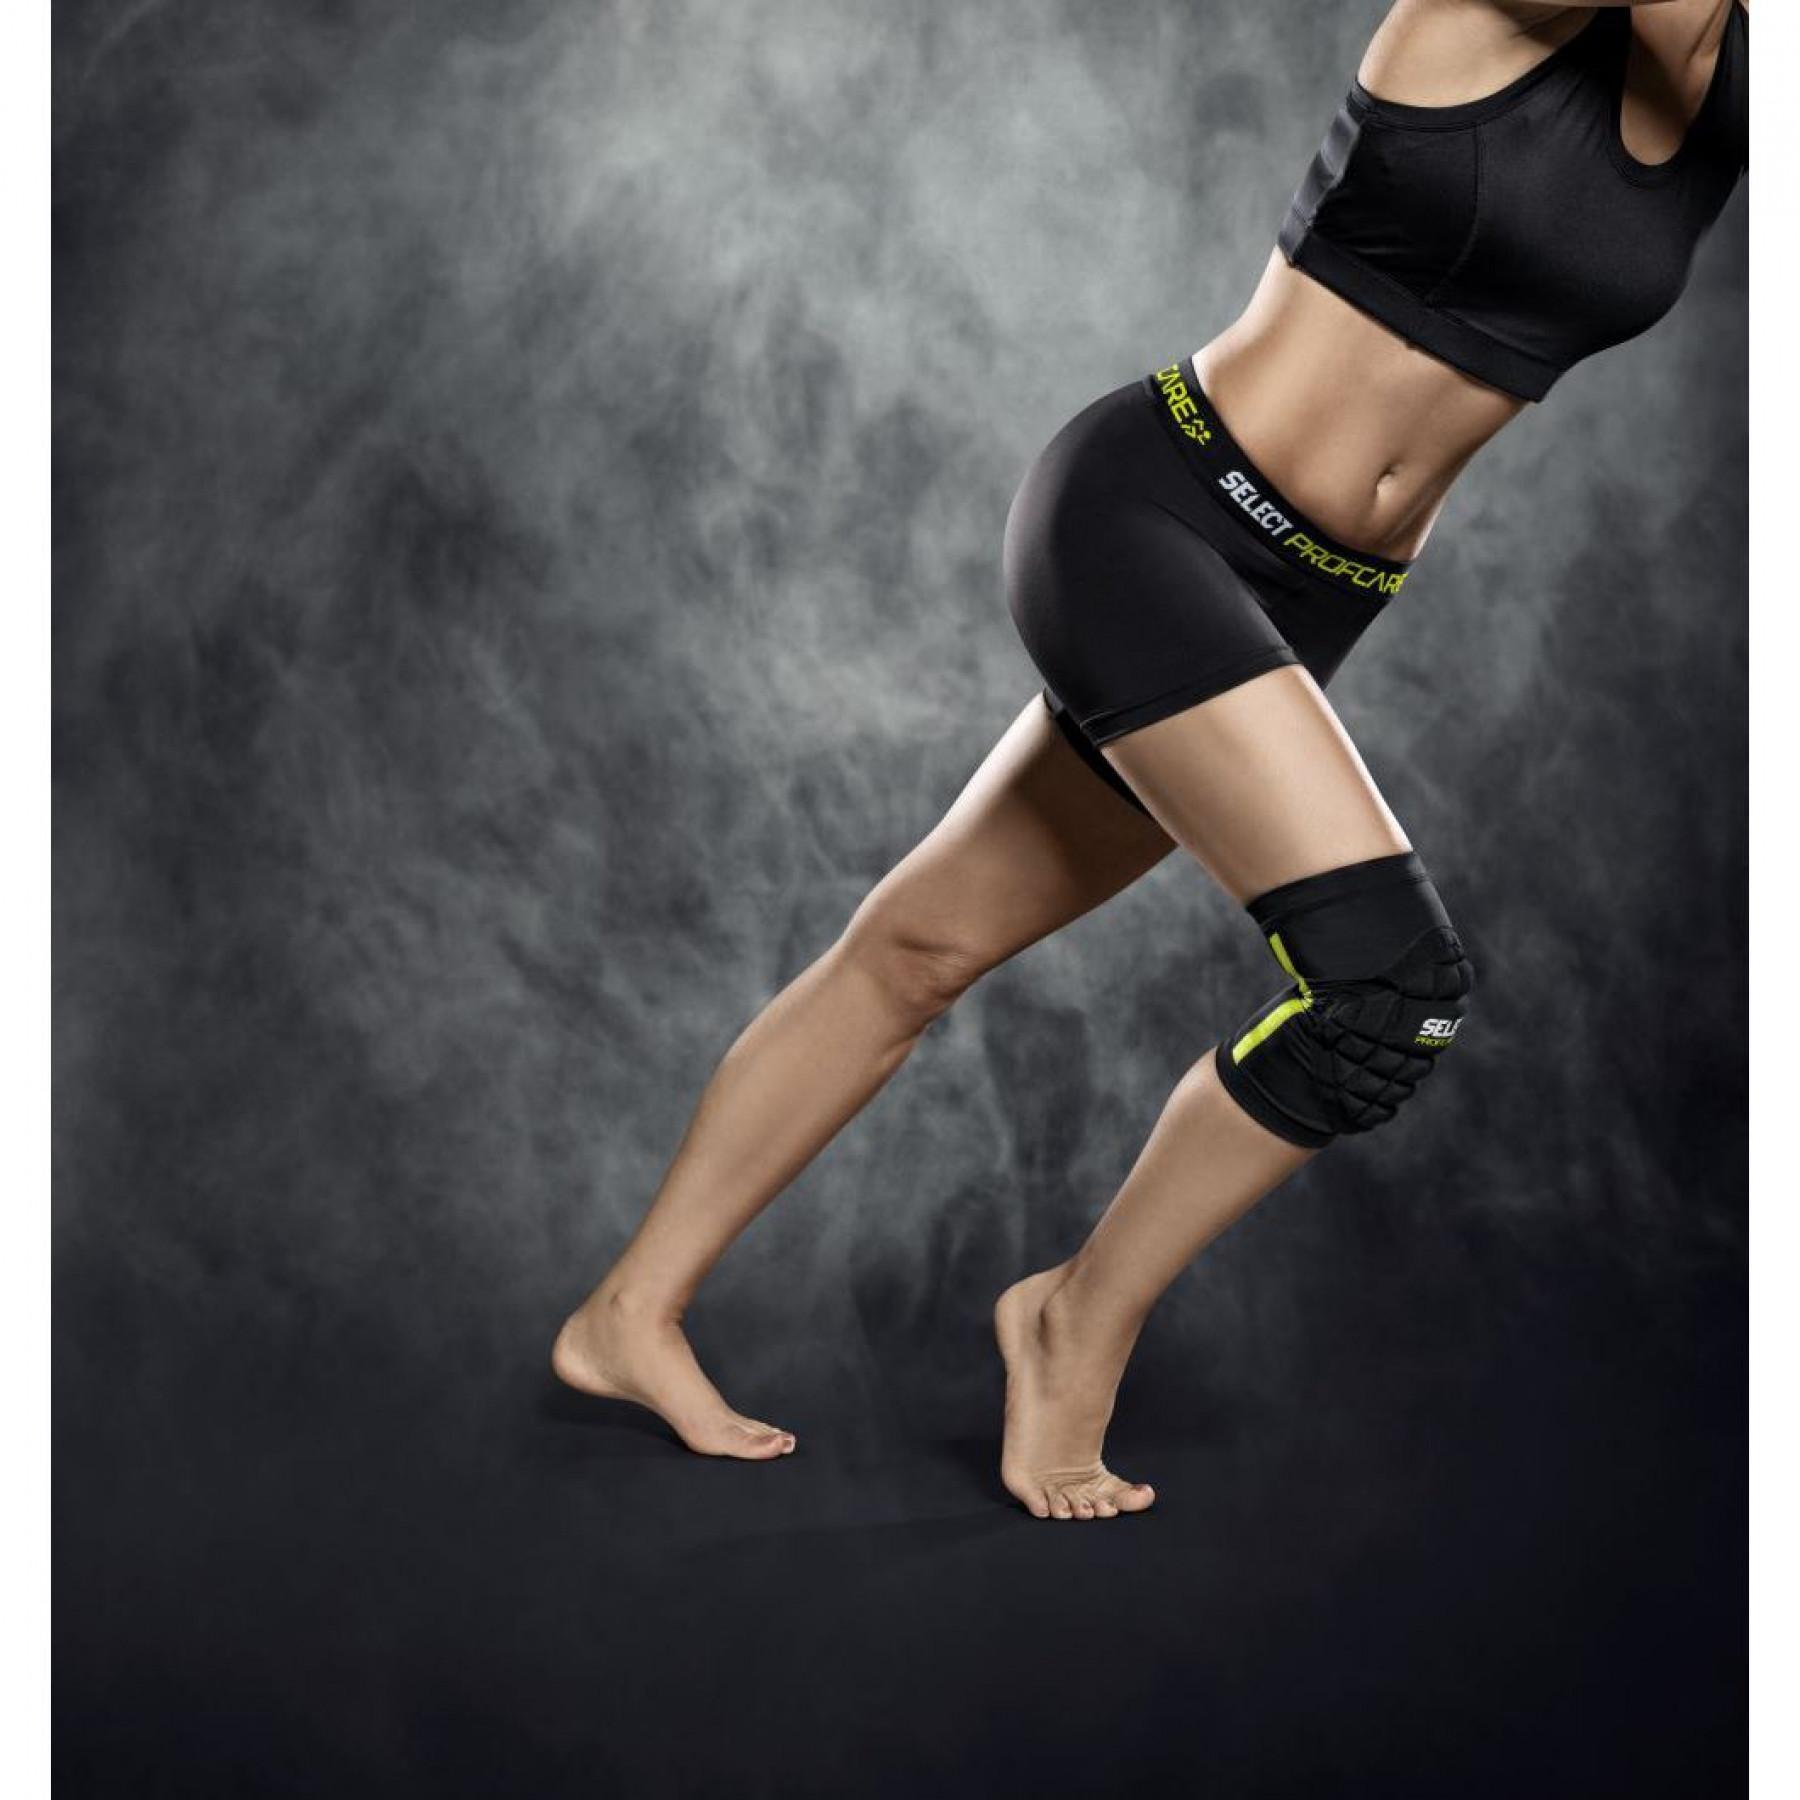 Women's compression knee brace Select 6251W